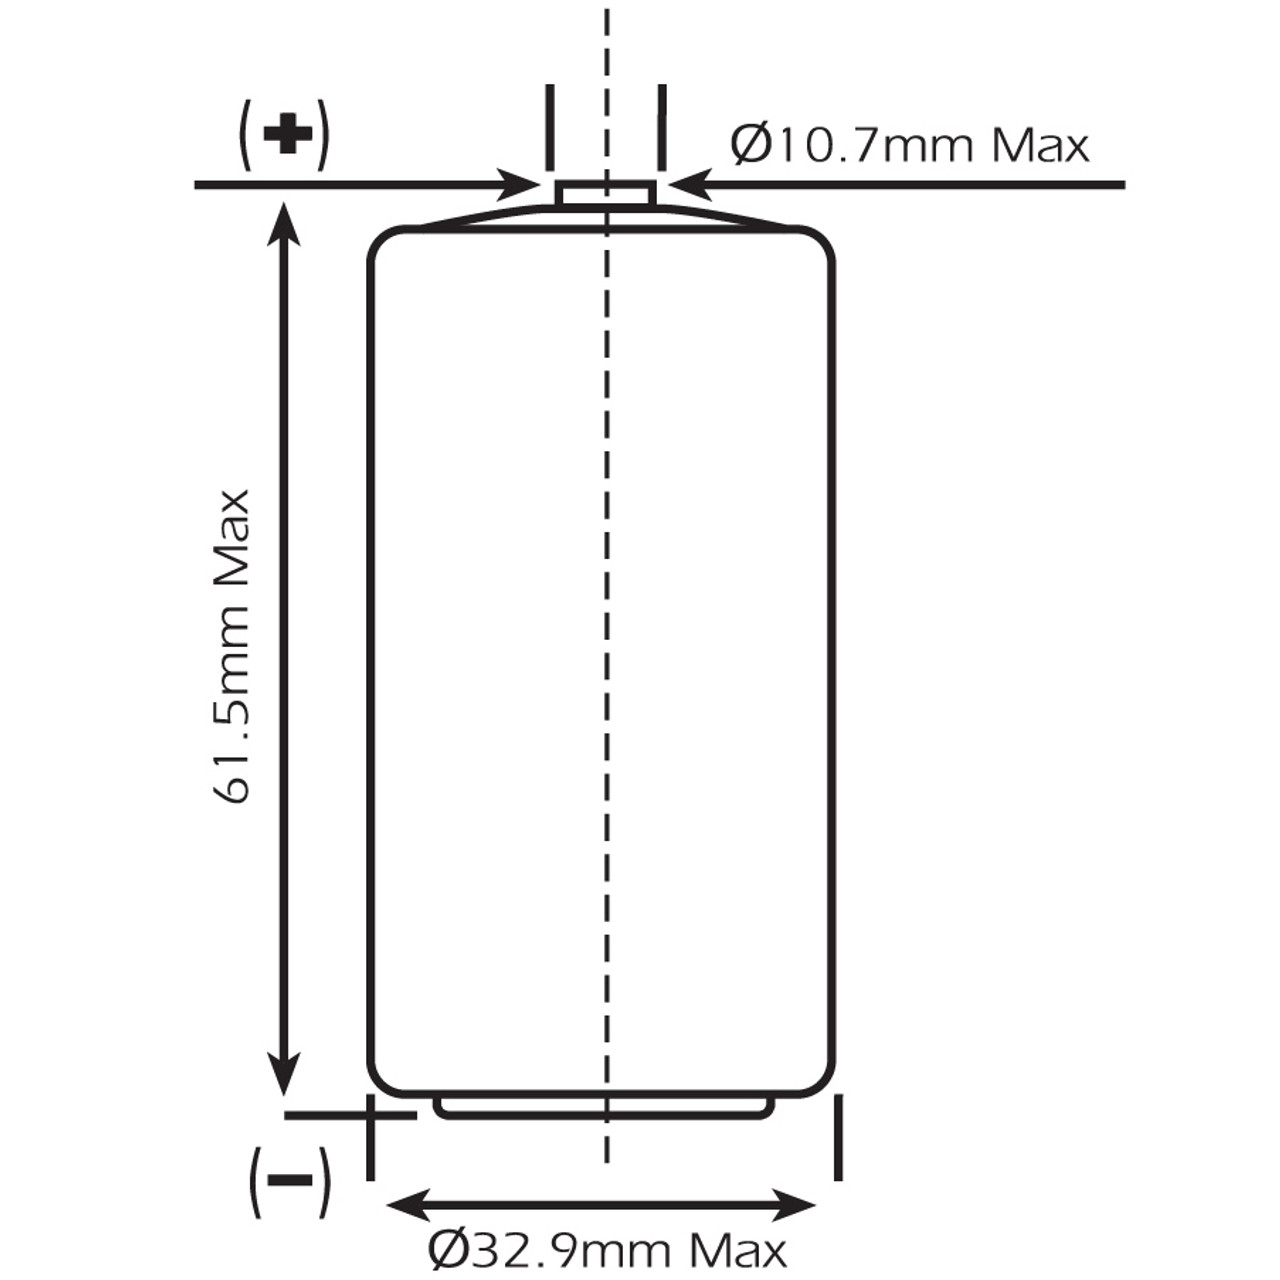 ER34615HD Lithium Thionyl Chloride (Li-SOCI2) Battery Dimensions